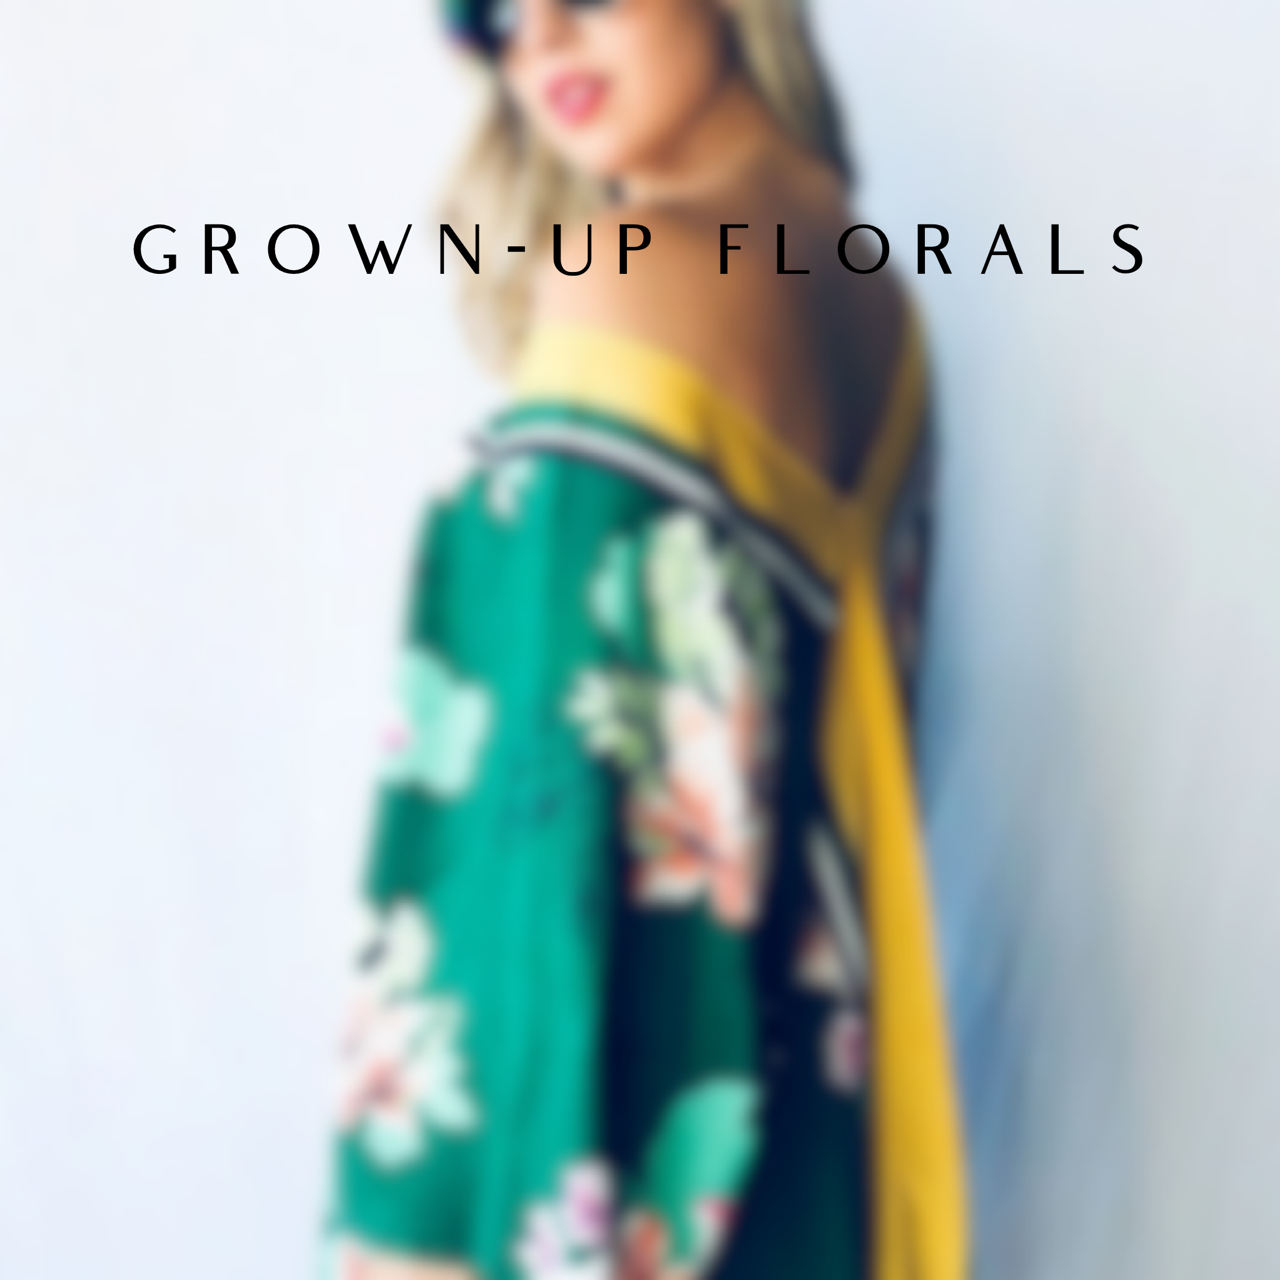 GROWN-UP FLORALS